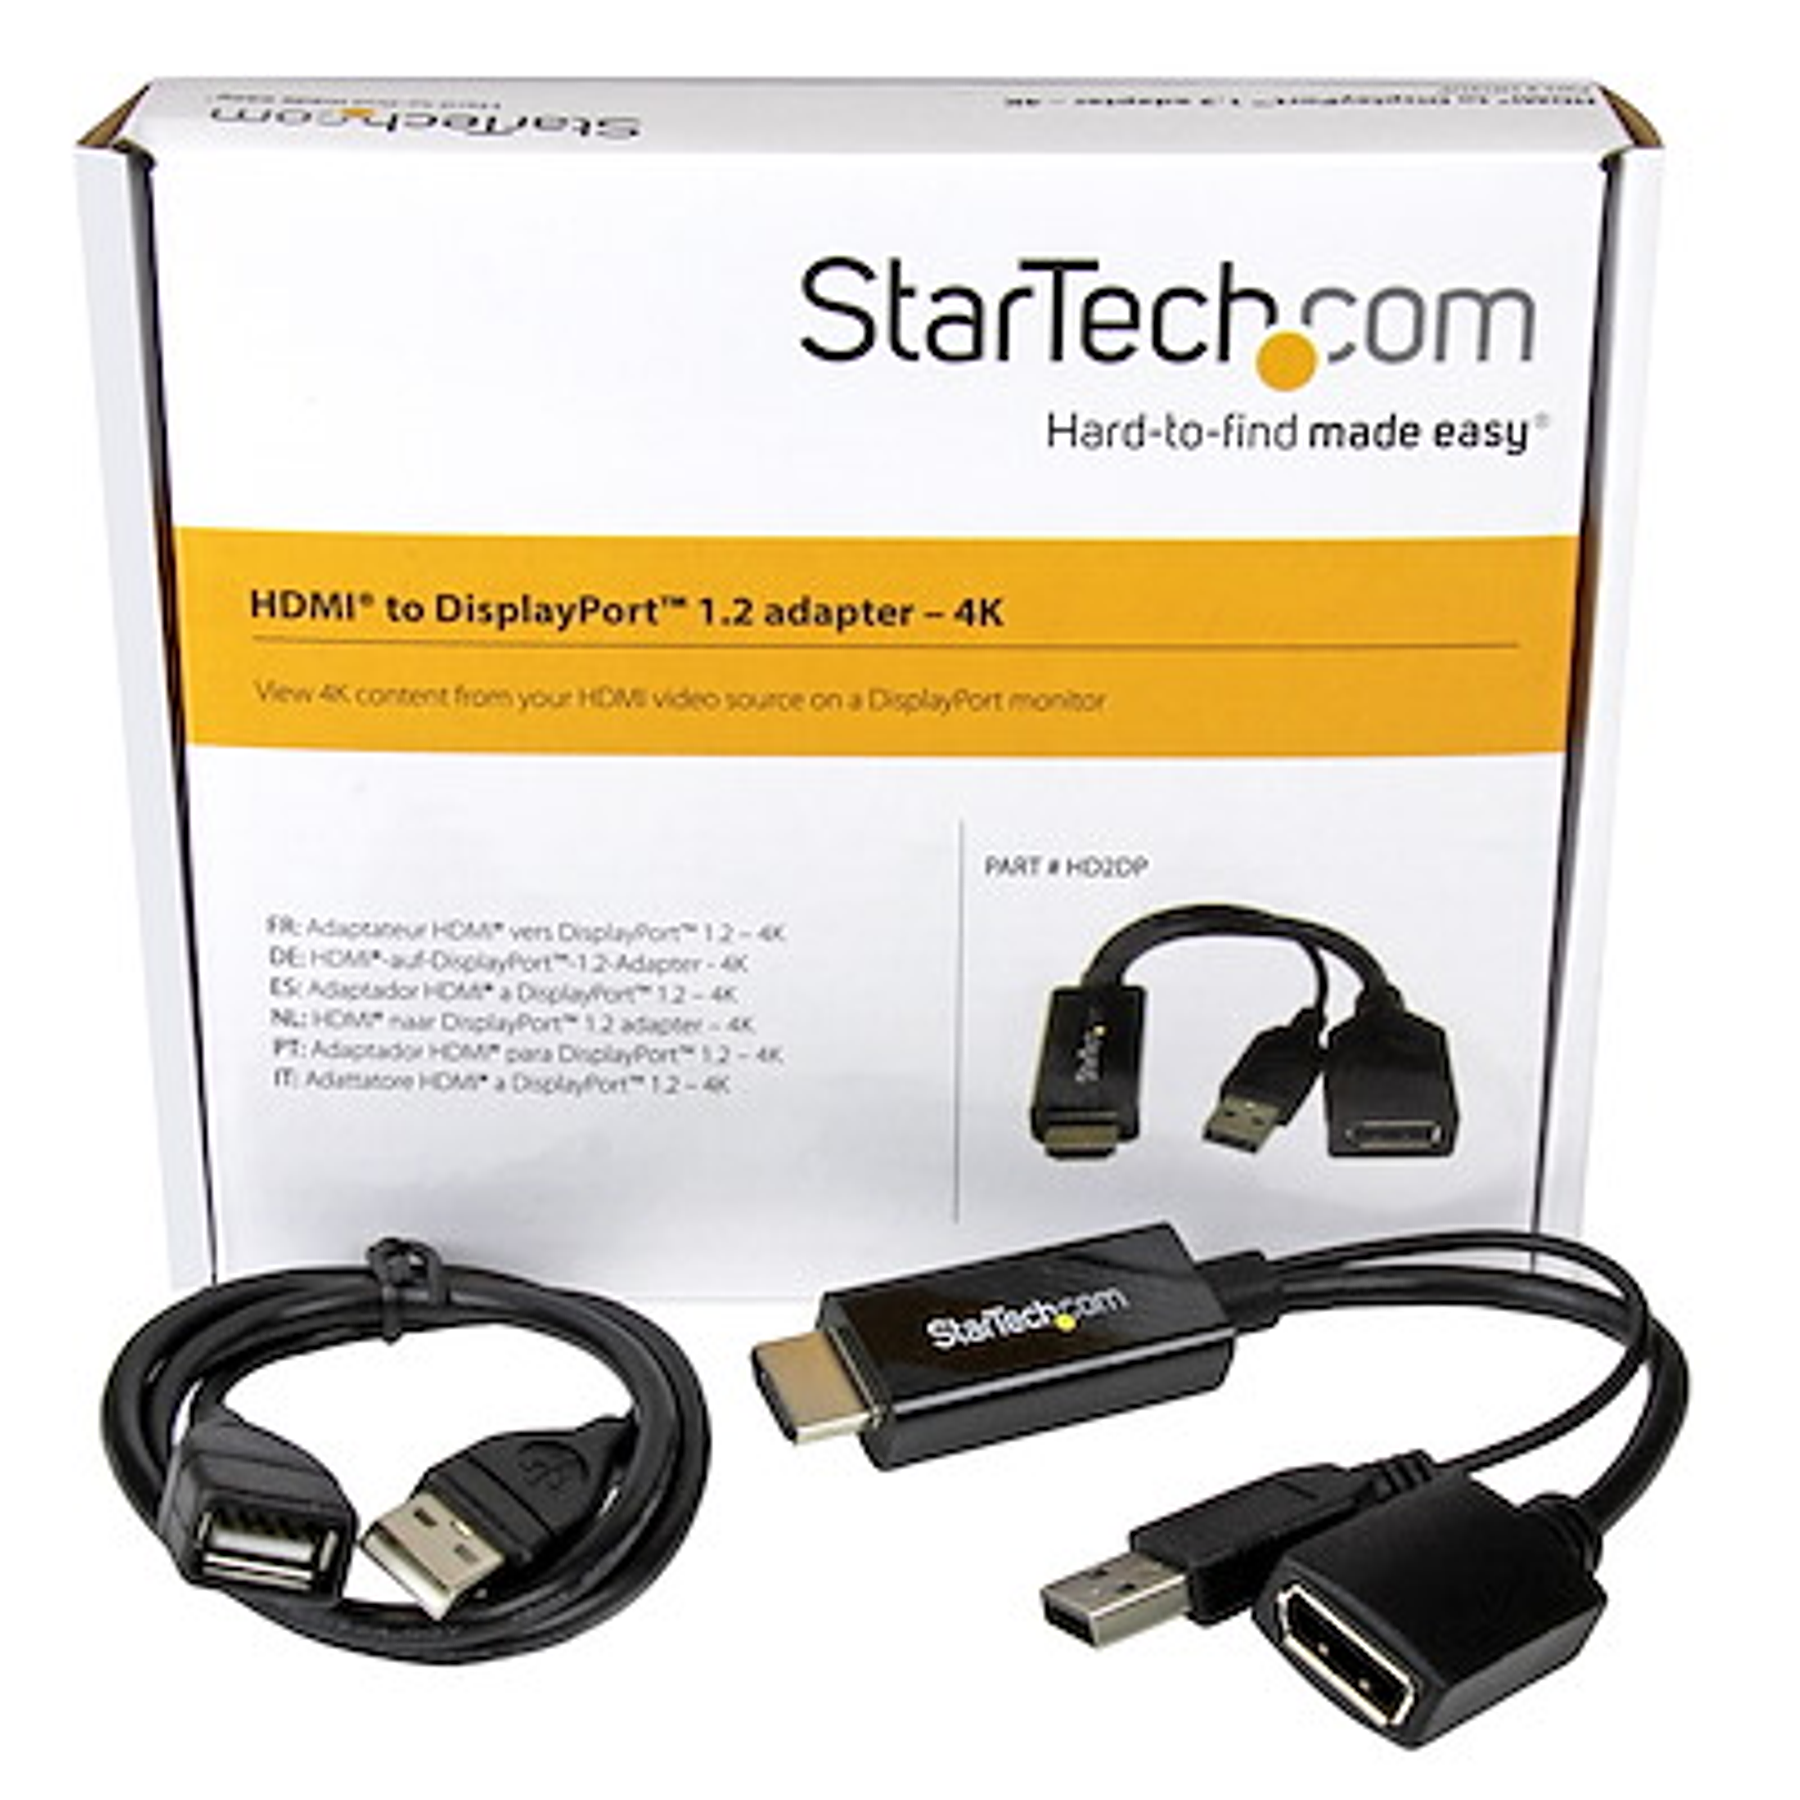 StarTech Conversor HDMI a DisplayPort 4K Convierta su monitor HDMI a DisplayPort con facilidad